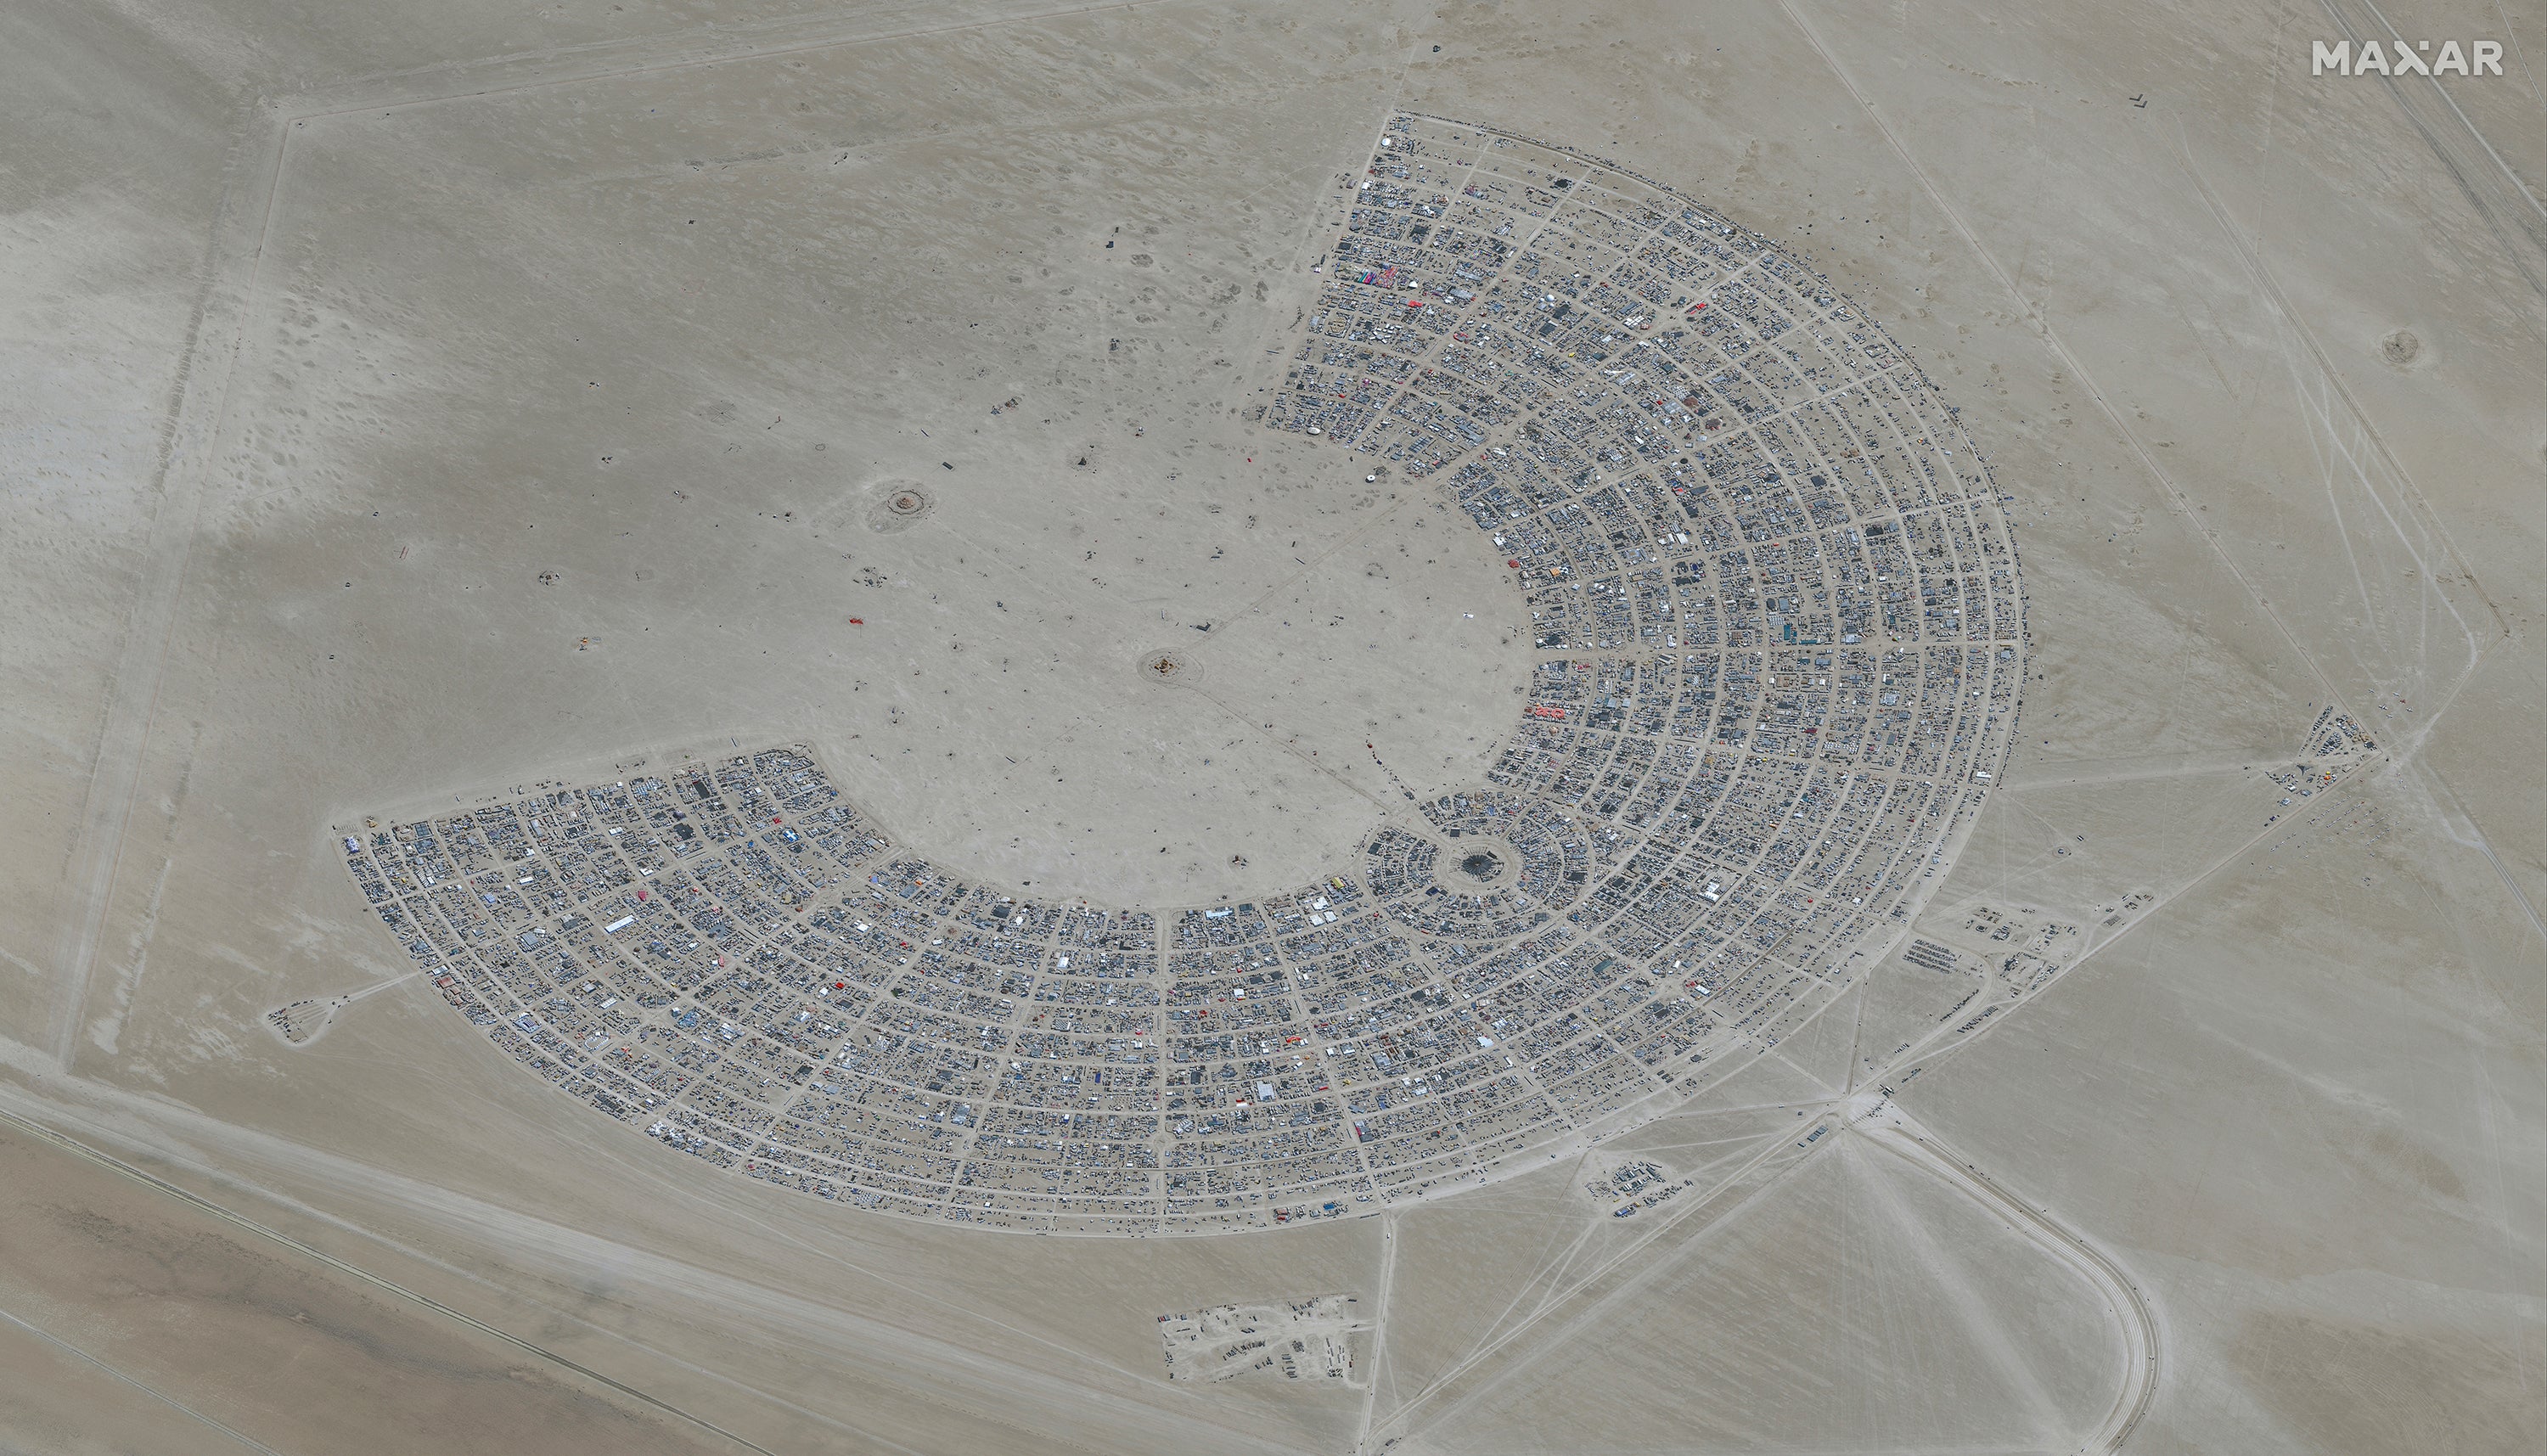 A satellite image showing Burning Man festival